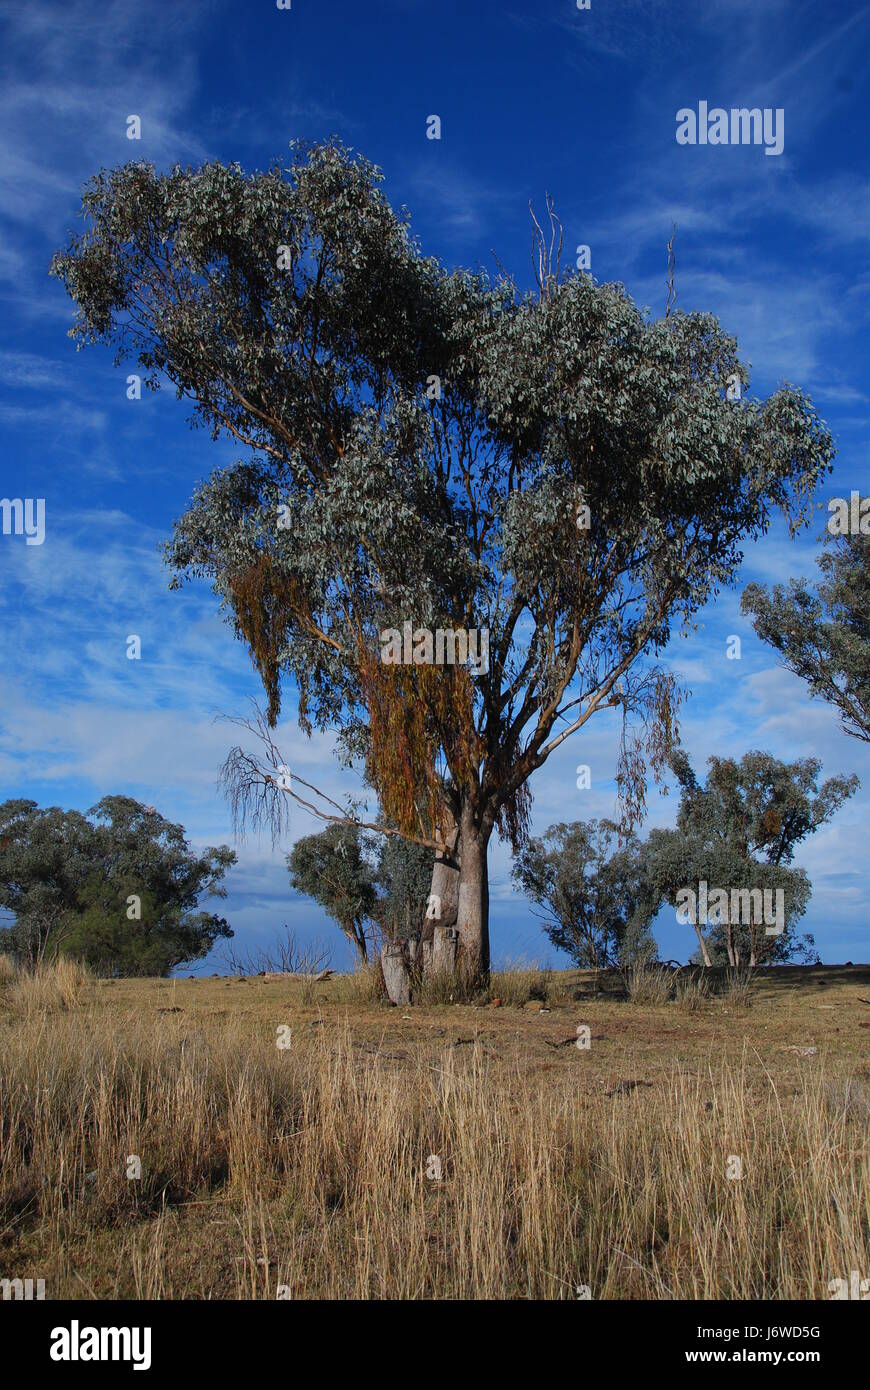 tree australia dryness dry dried up barren eucalyptus meadow grass lawn green Stock Photo